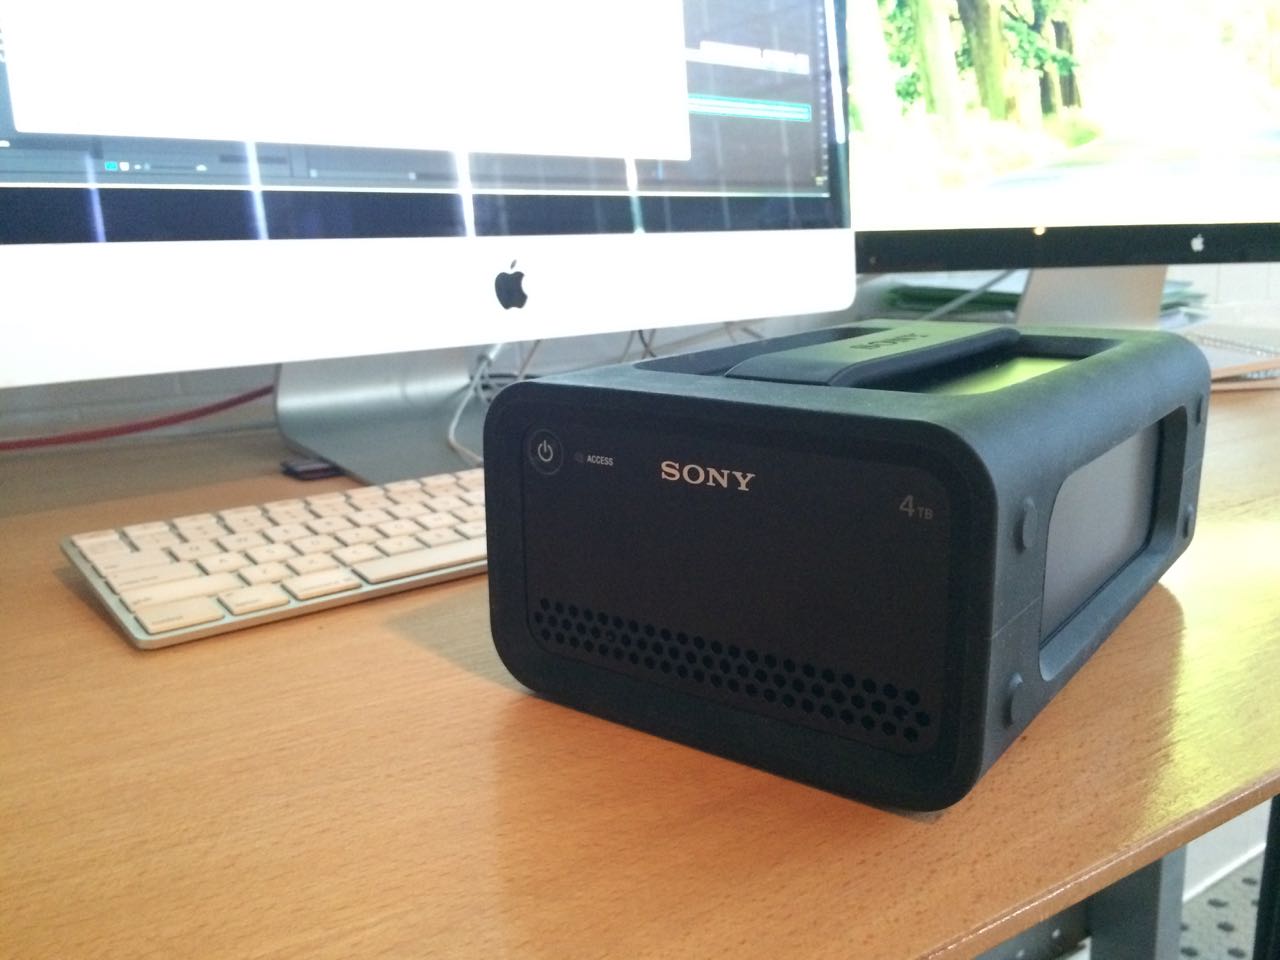 Review: Sony PSZ-RA4T hard drive - A very portable rugged RAID 22